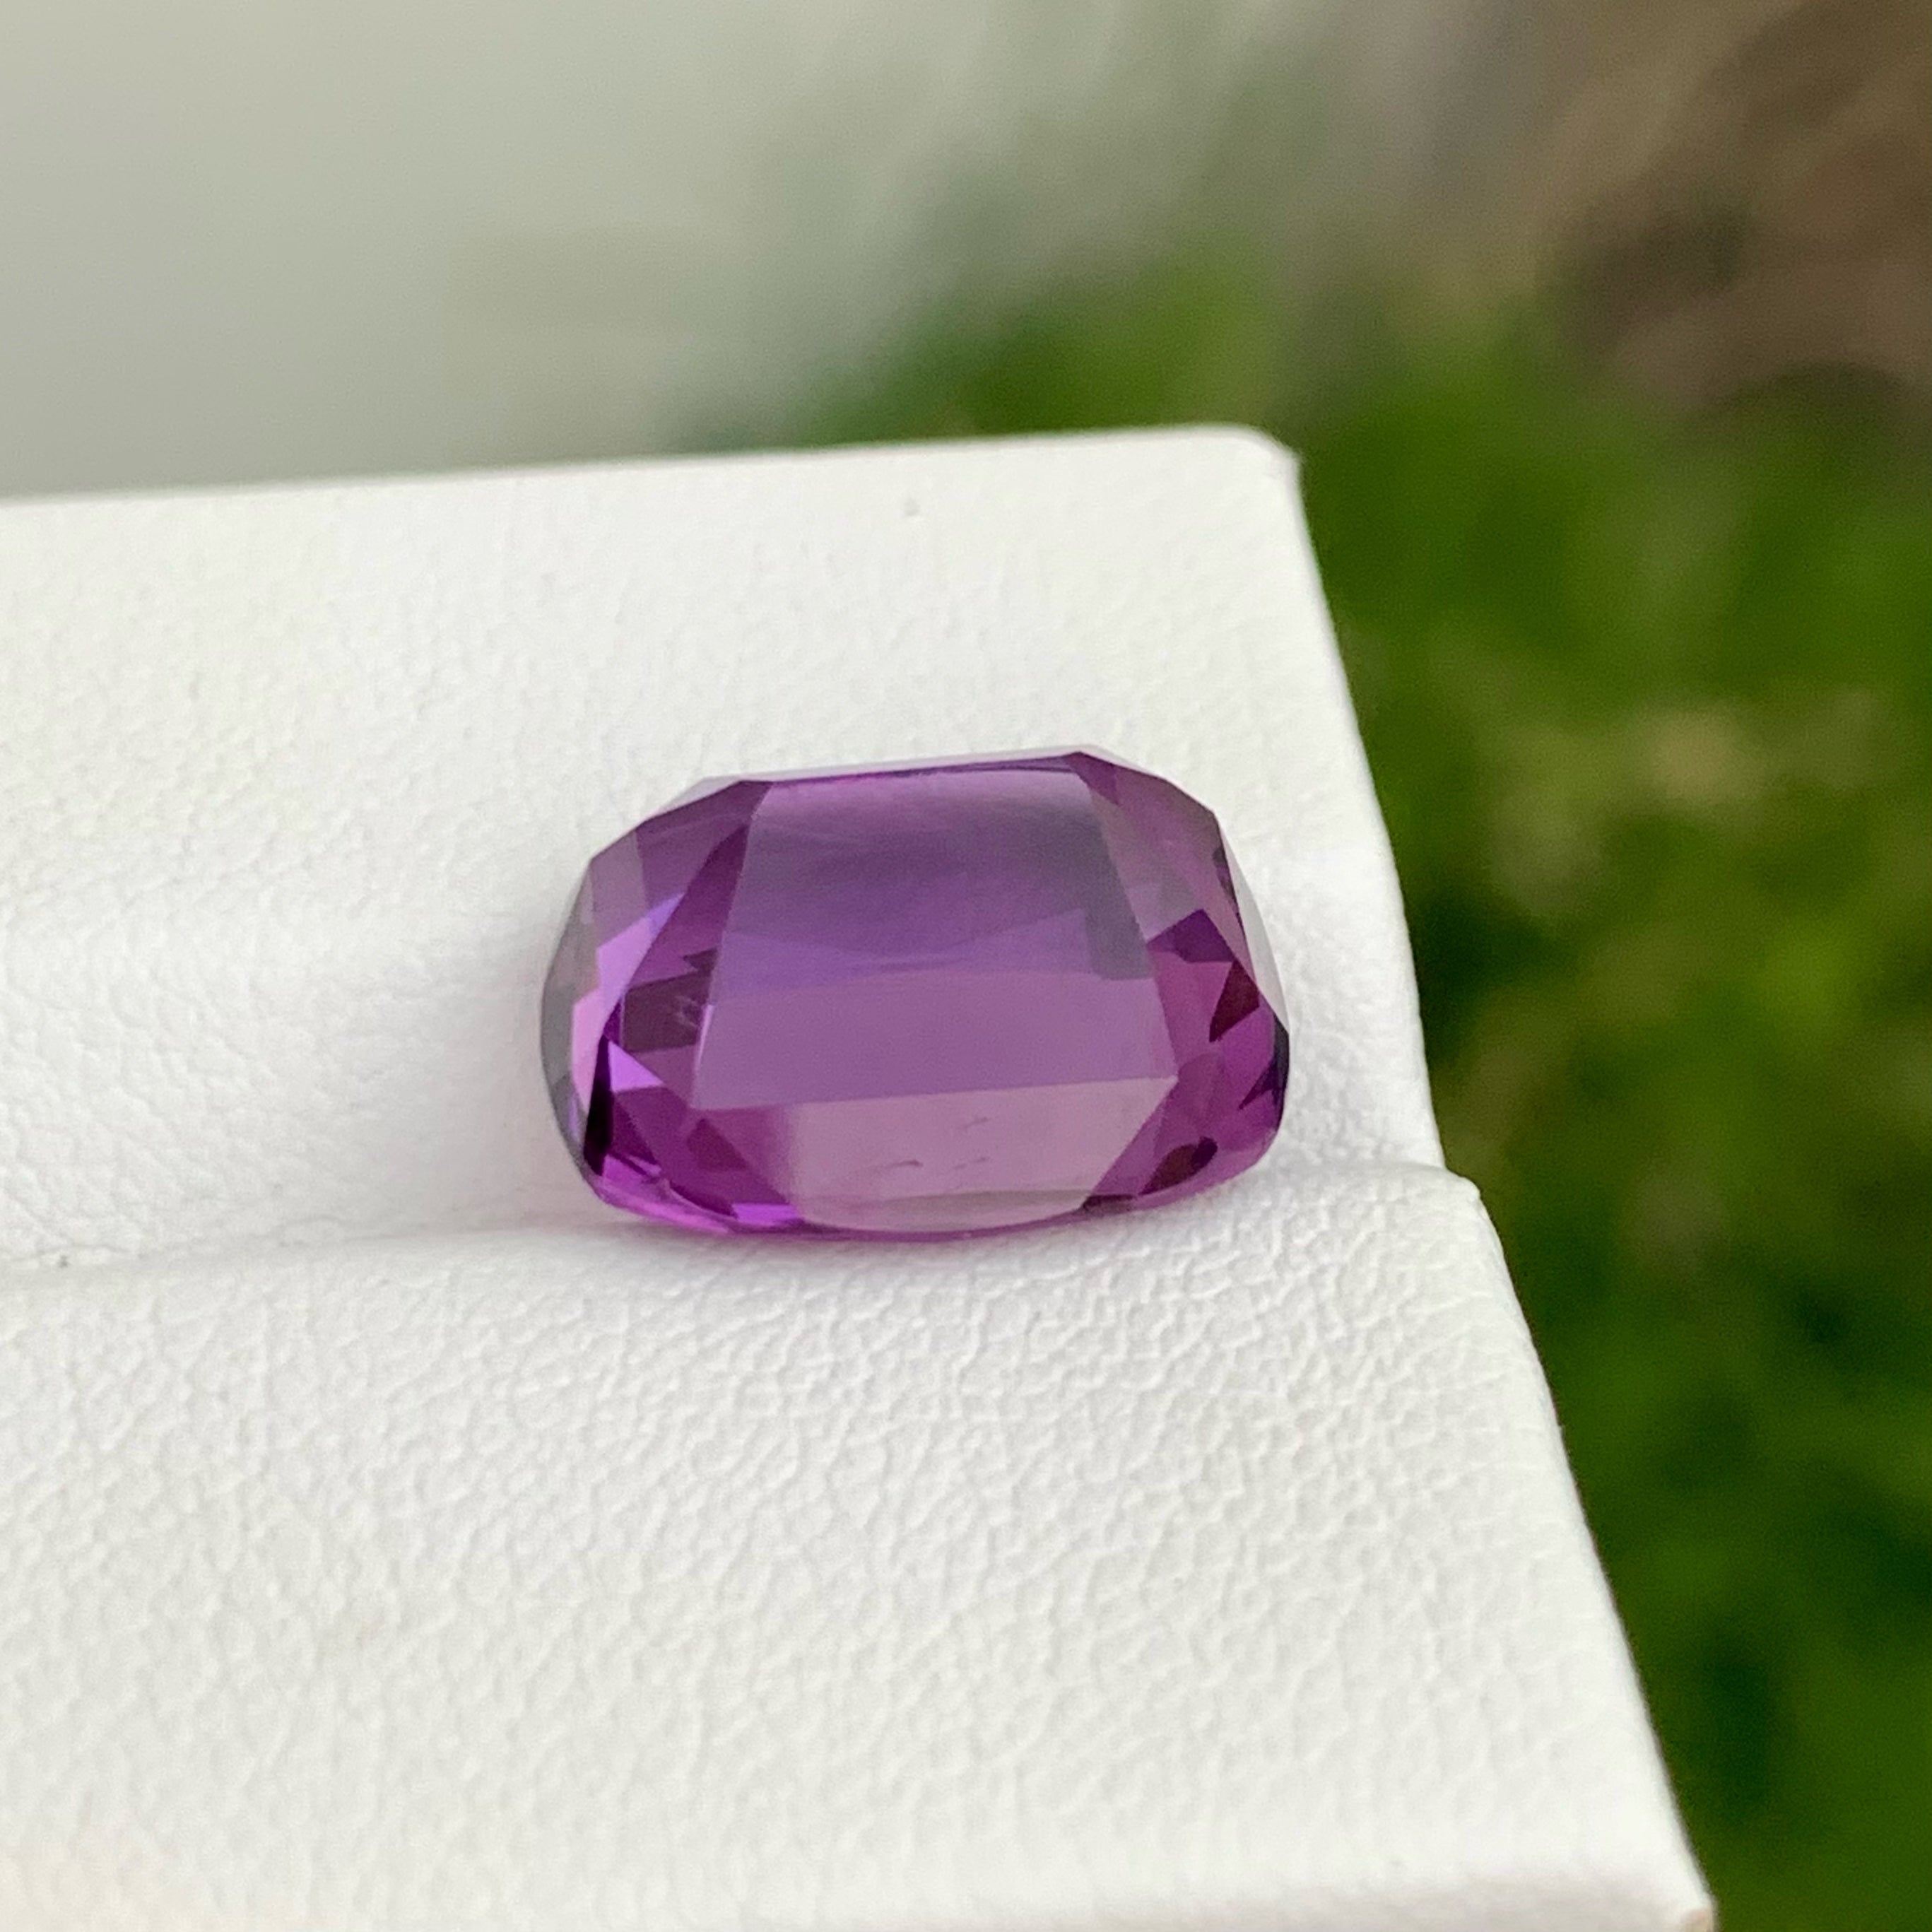 Softening Purple Amethyst Stone 8.70 carats Cushion Cut Natural Brazilian Gemstone